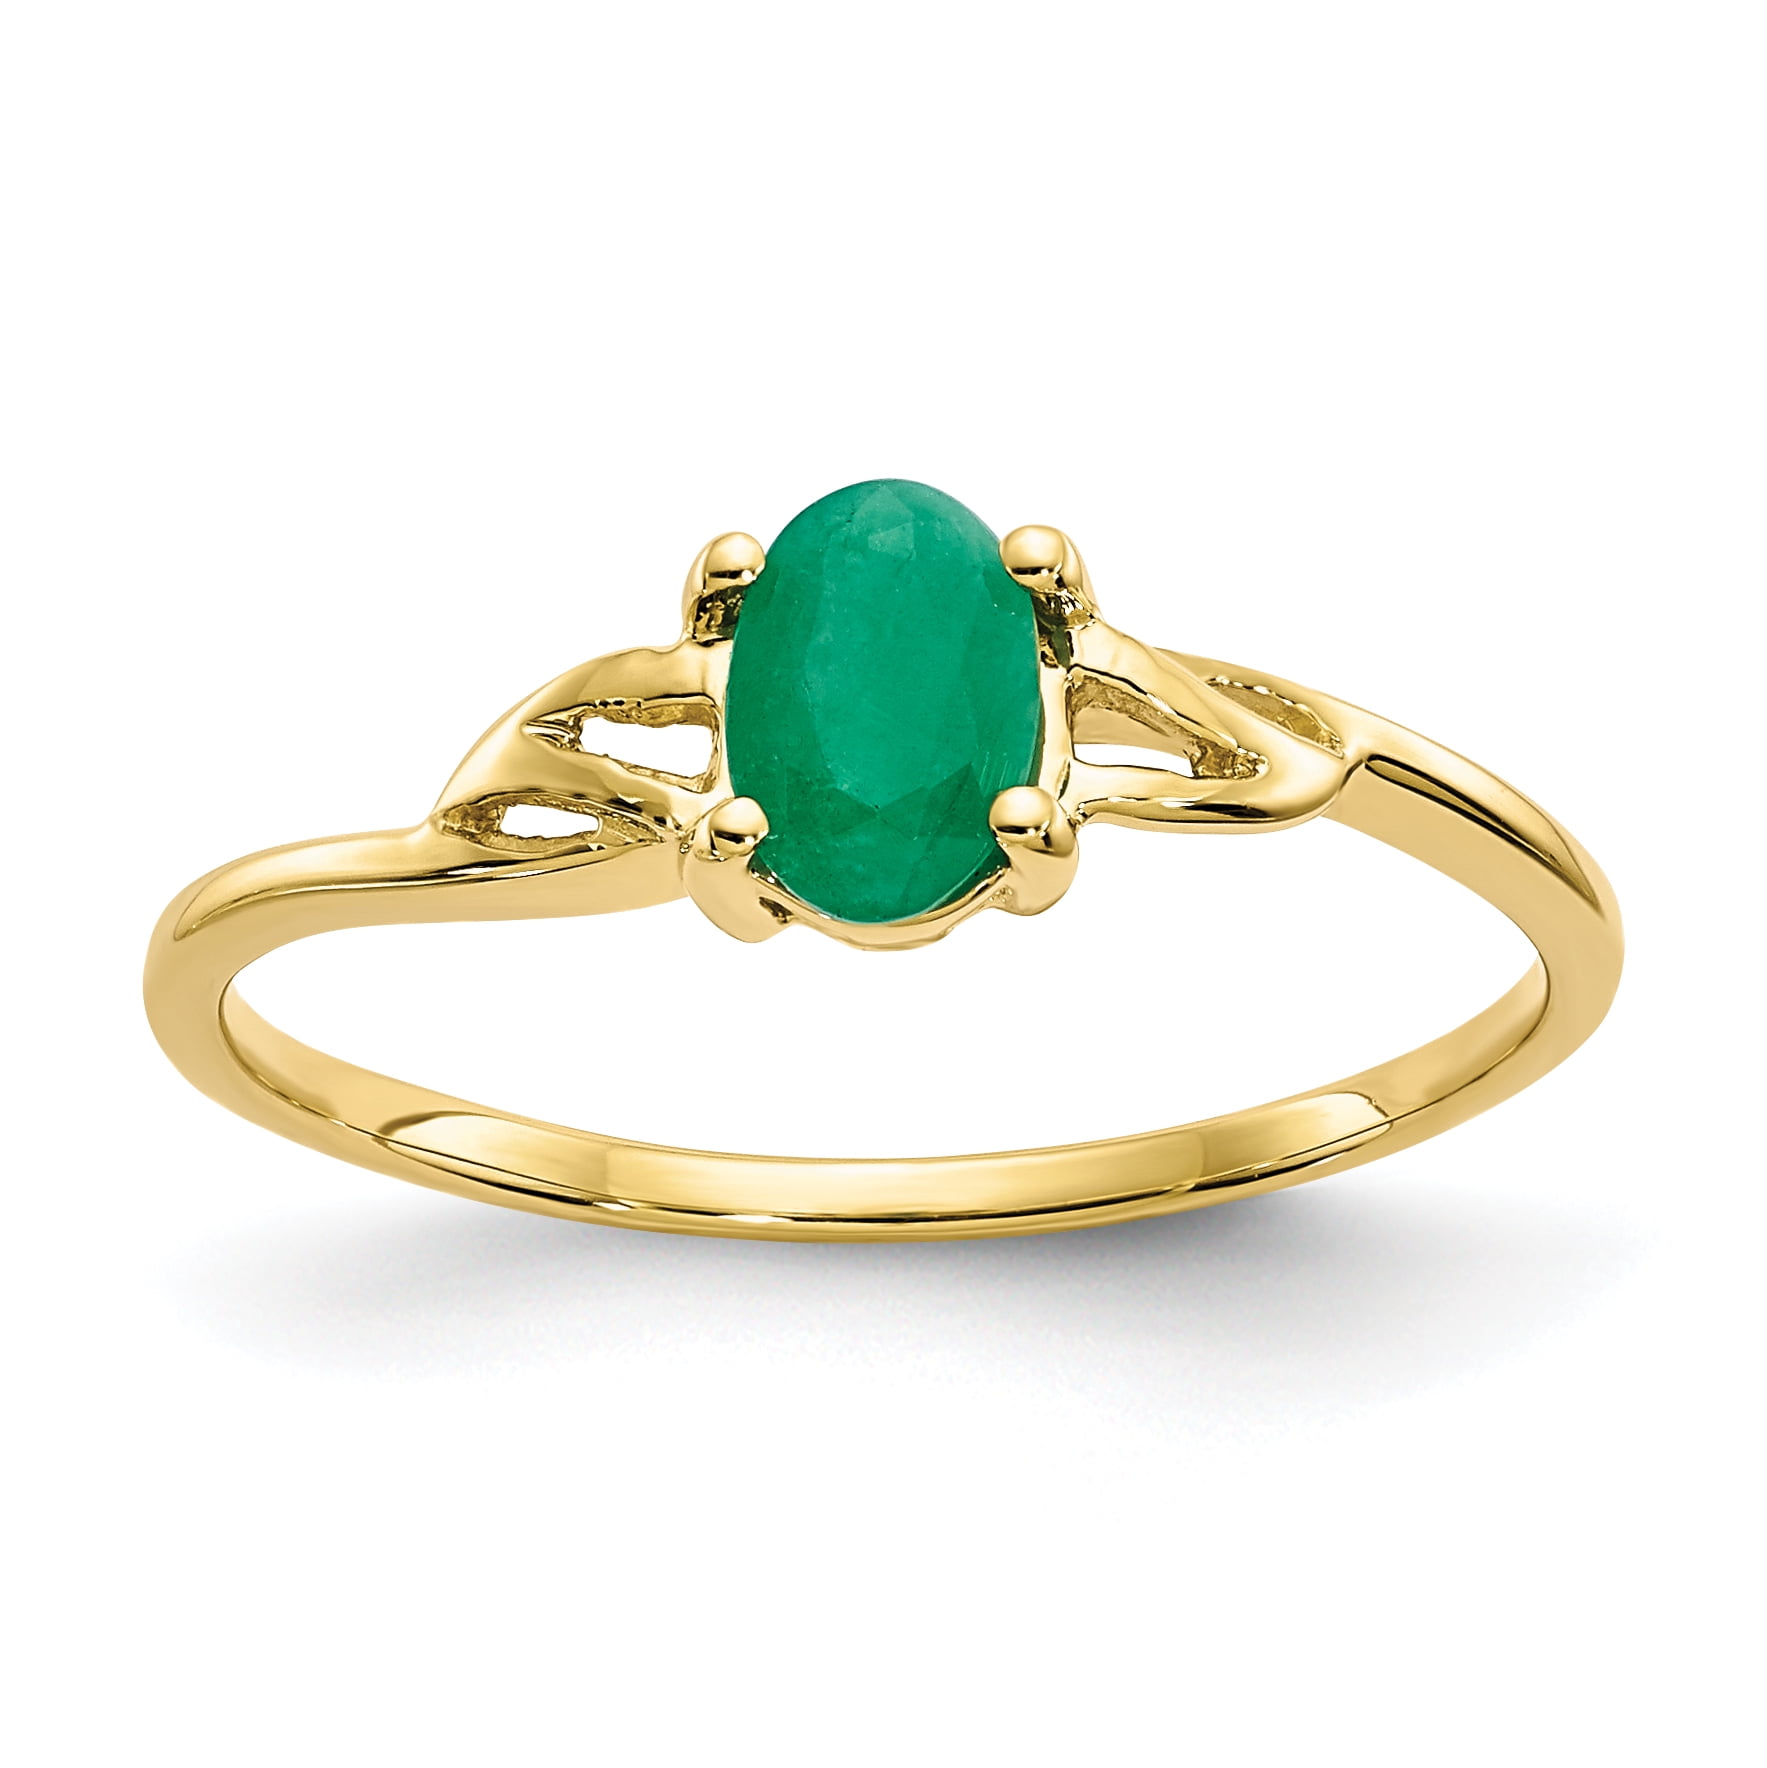 Vintage Emerald Ring Women Anniversary Jewelry Size 6 7 8 9 14K Yellow Gold 